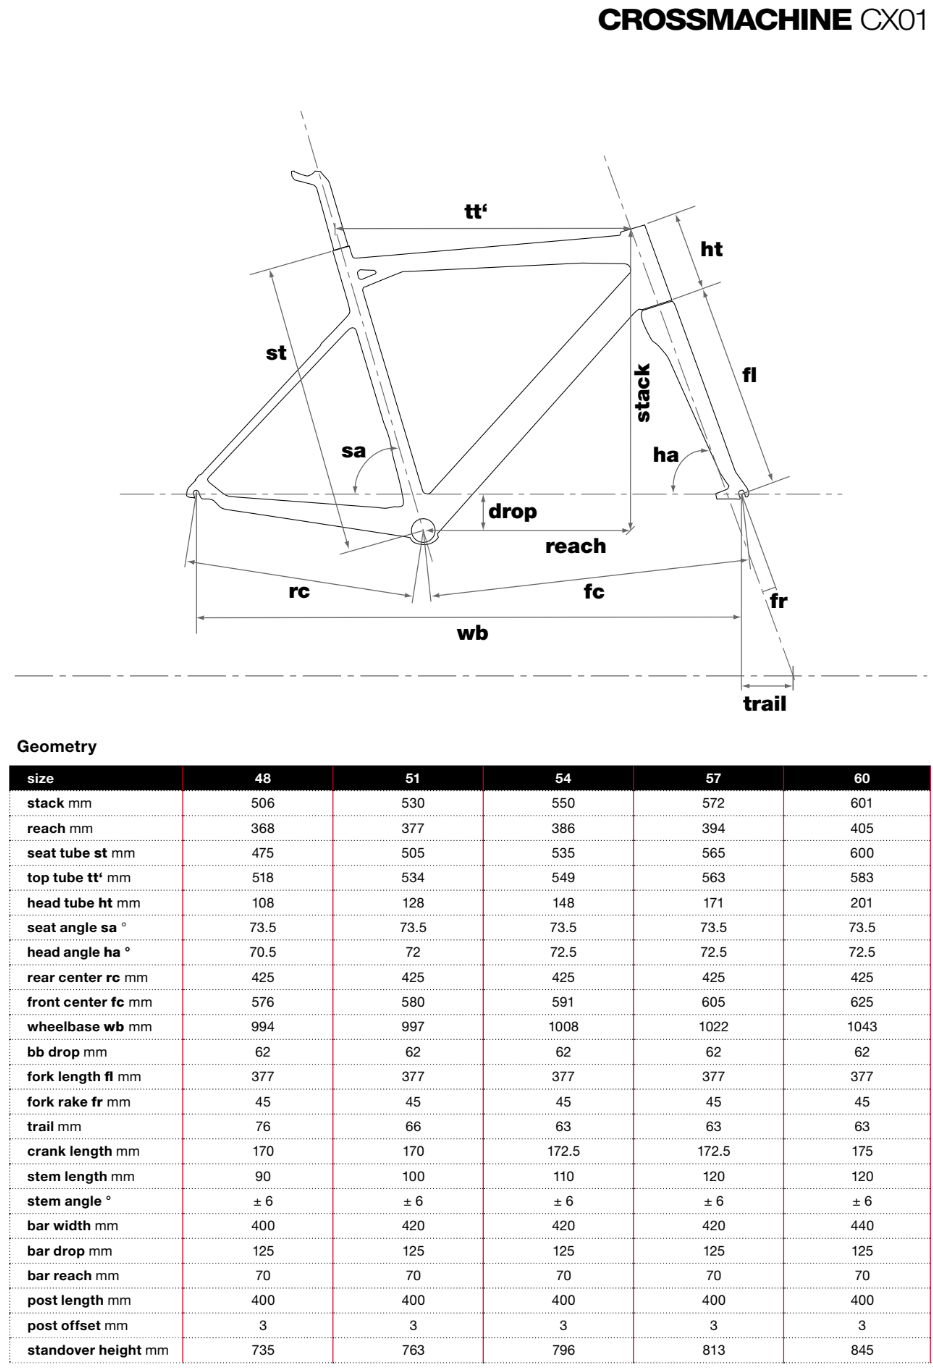 BMC Crossmachine CX 01 geometry chart